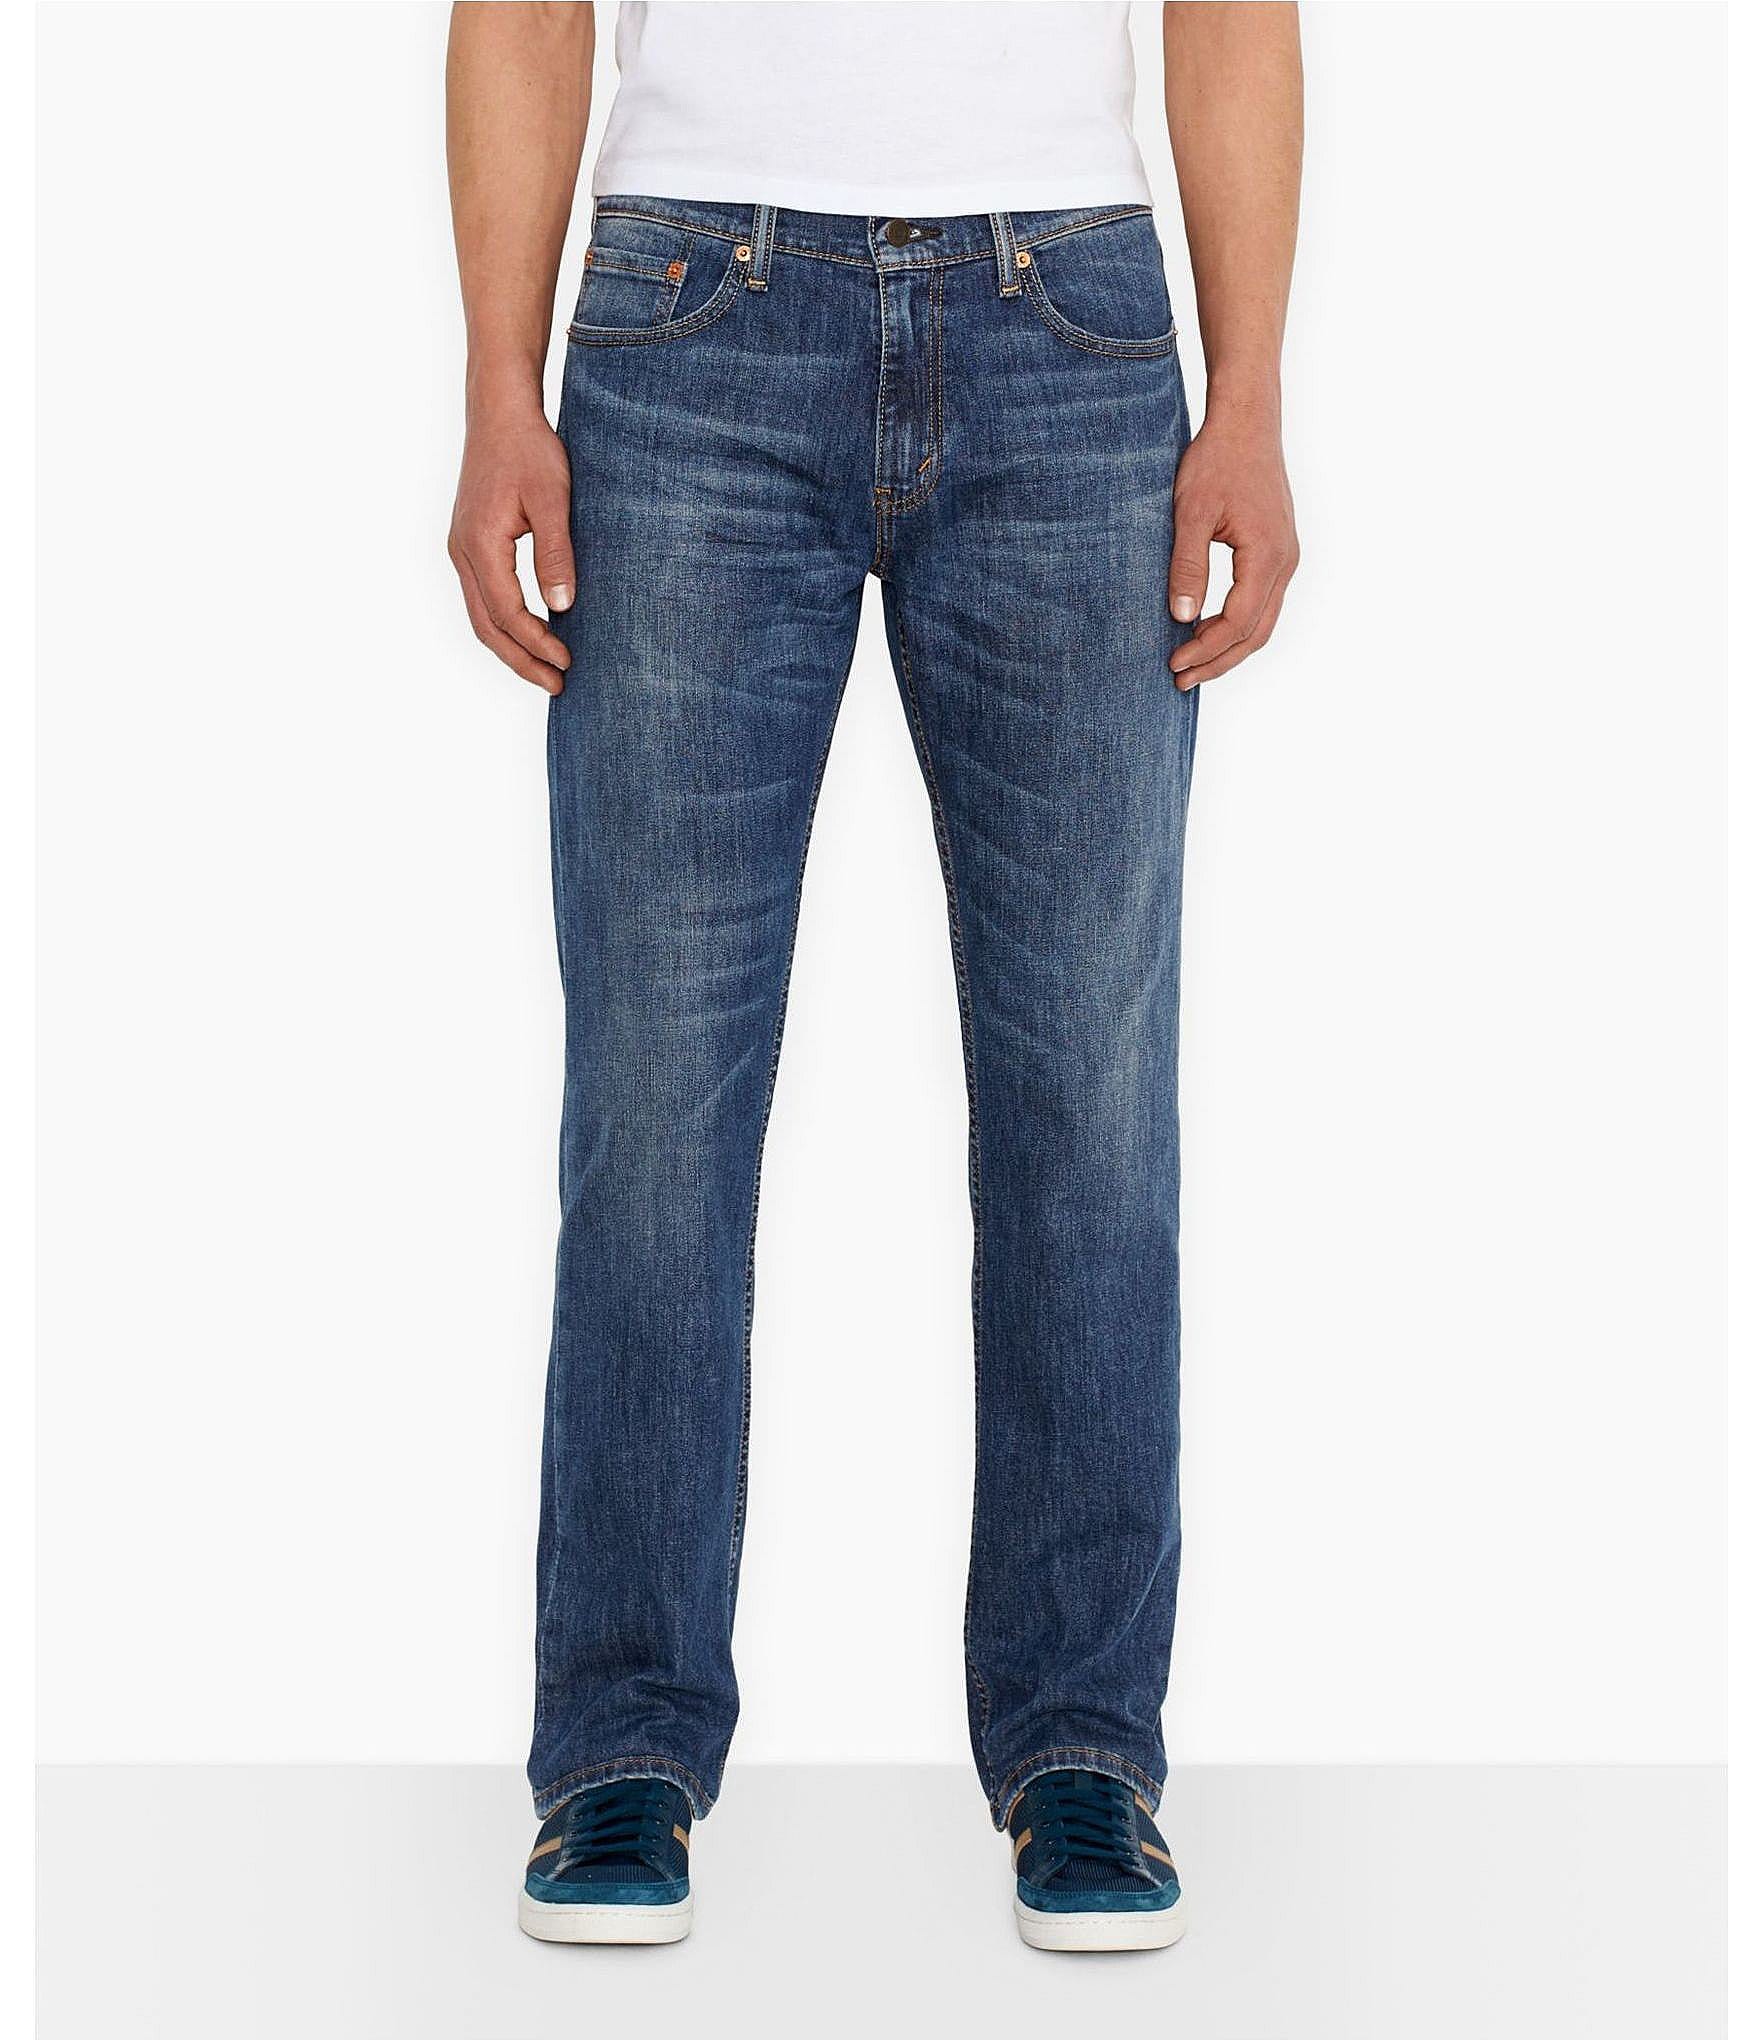 levi's 559 stretch jeans